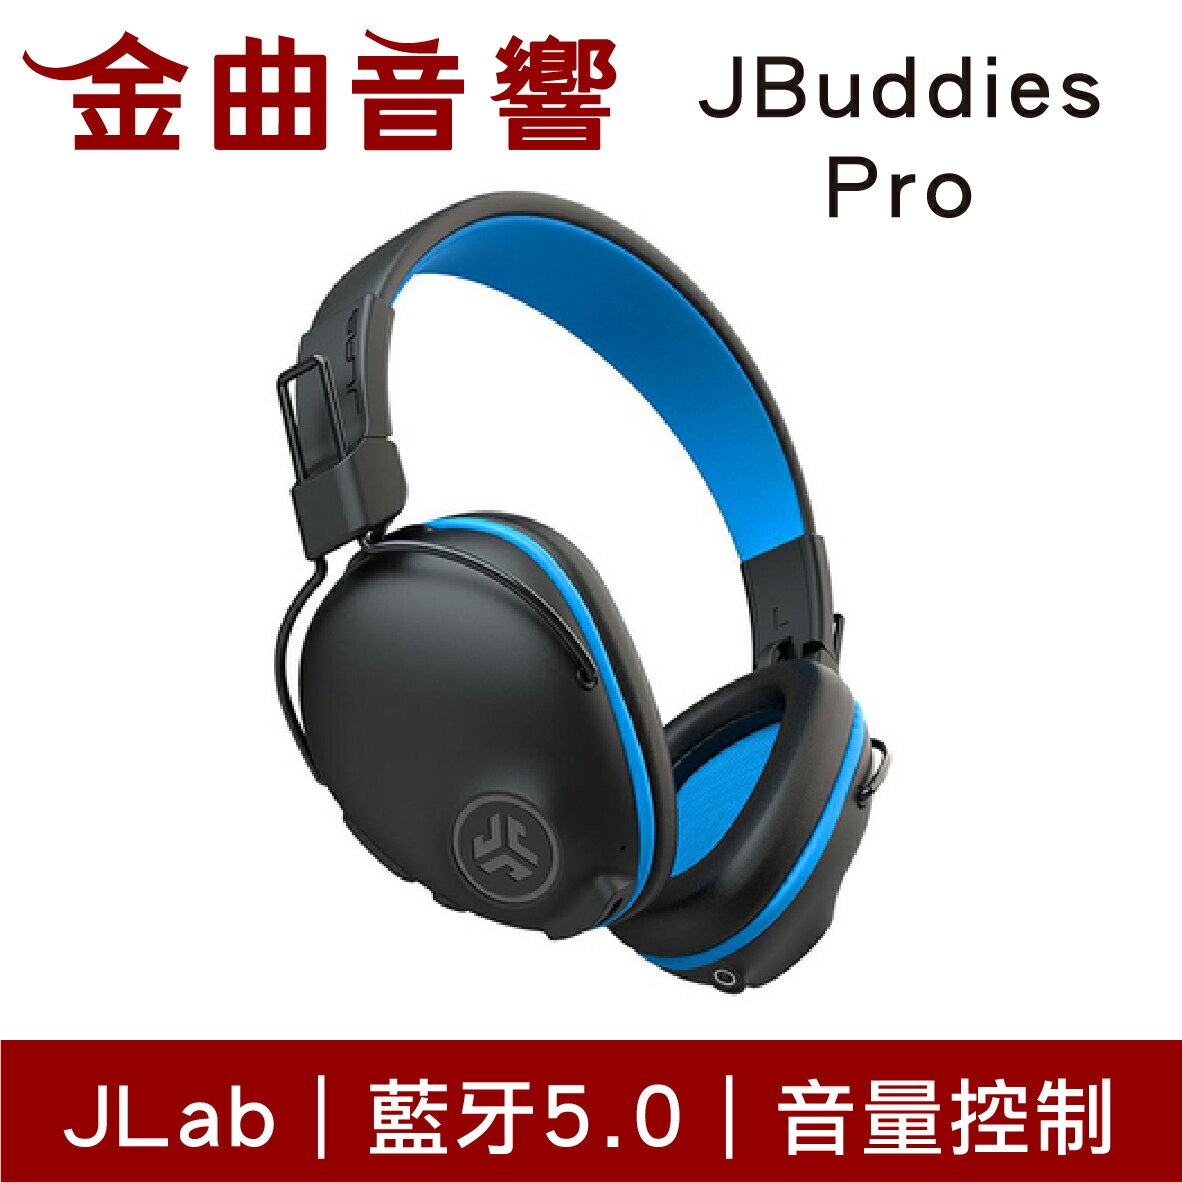 JLAB JBuddies Pro 藍色 音量控制 麥克風 40mm驅動 兒童 青少年 藍牙 耳罩式 耳機 | 金曲音響